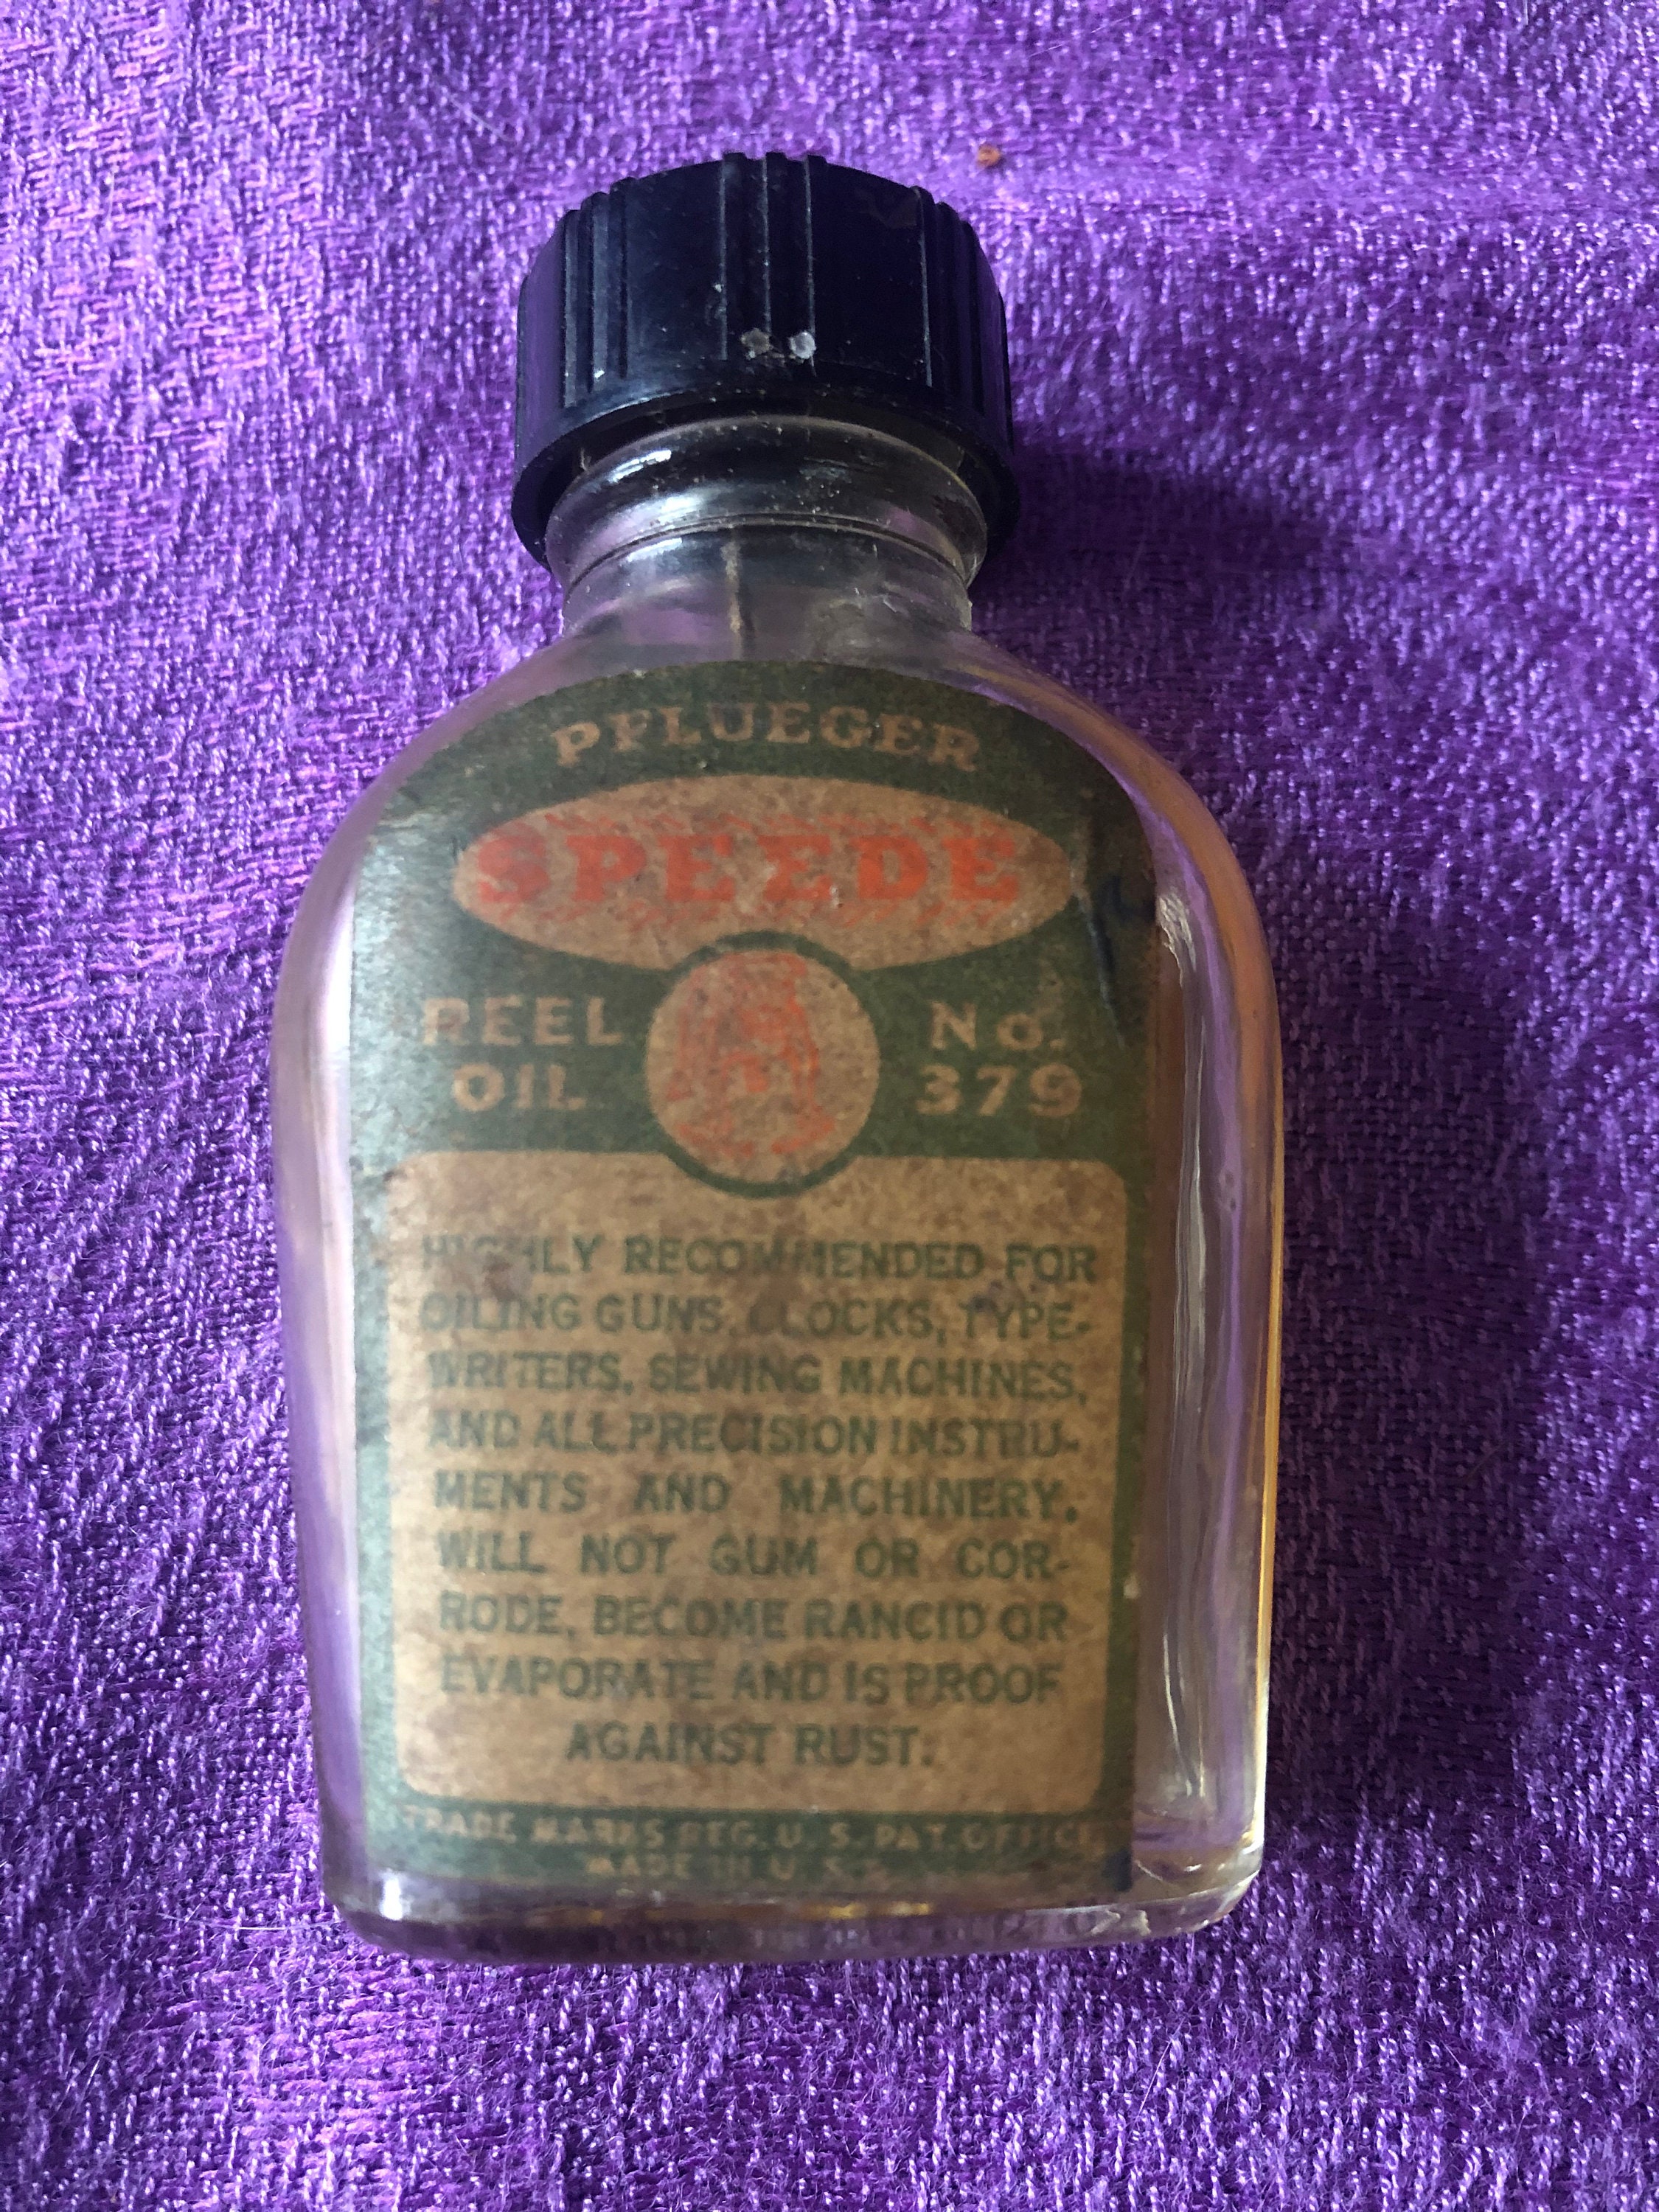 Vintage Pflueger Speede Reel Oil No. 379 Bottle, Owens-illinois Glass Co. -   Canada